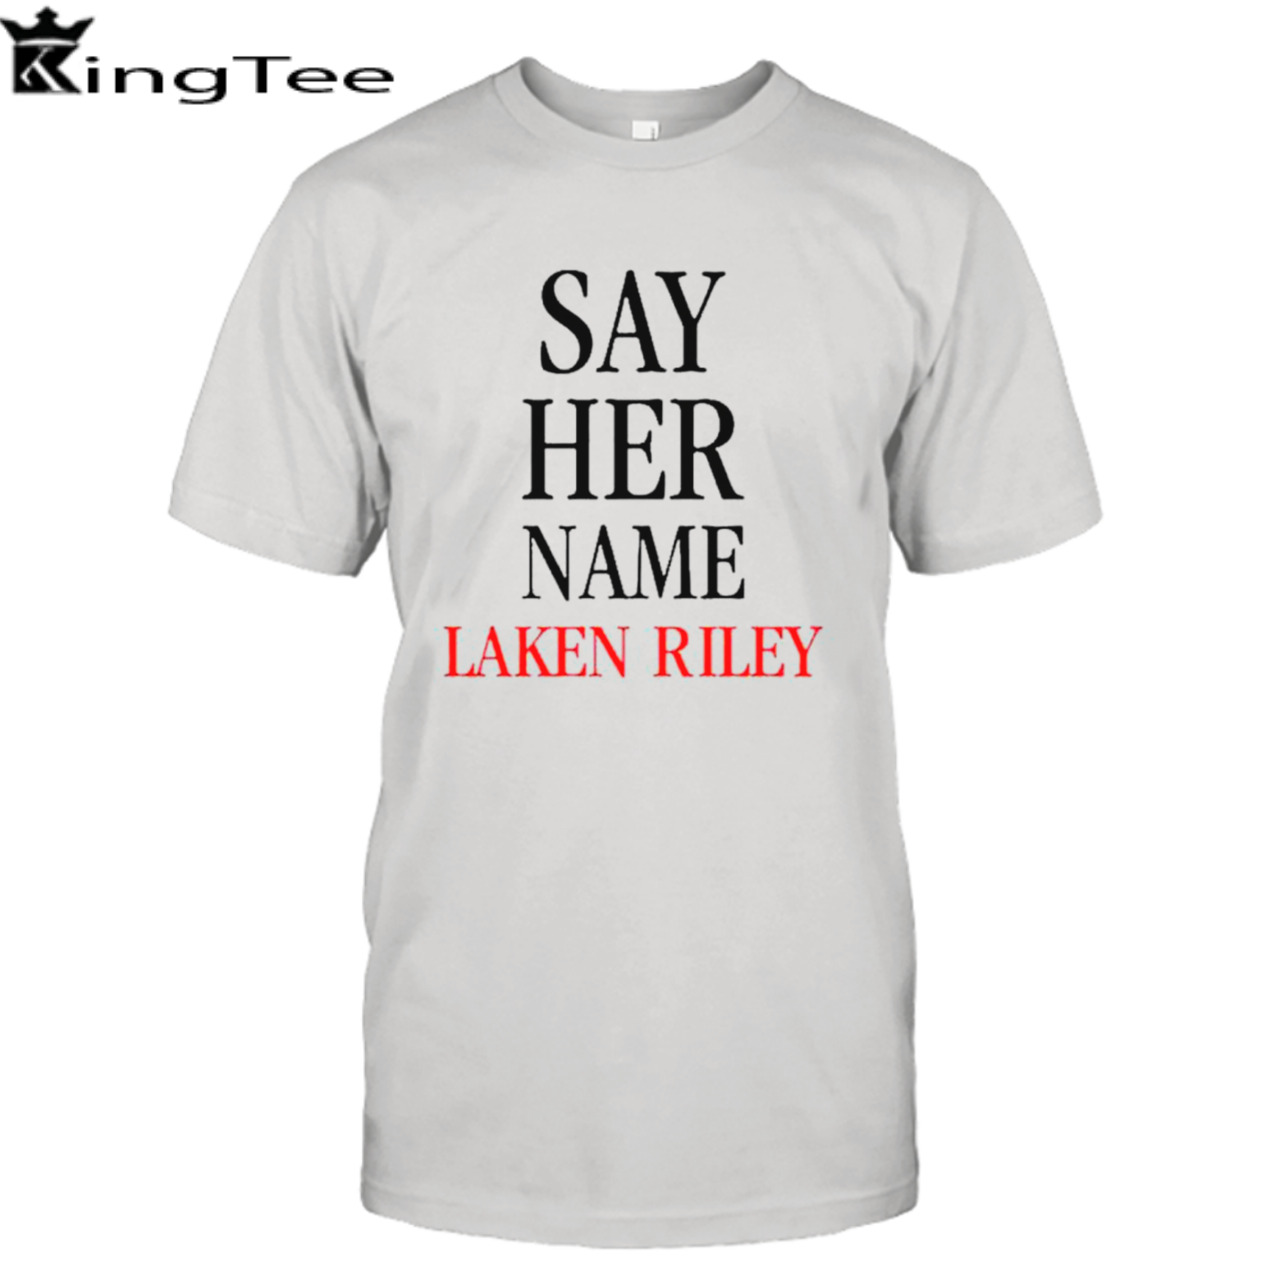 Say her name Laken Riley shirt